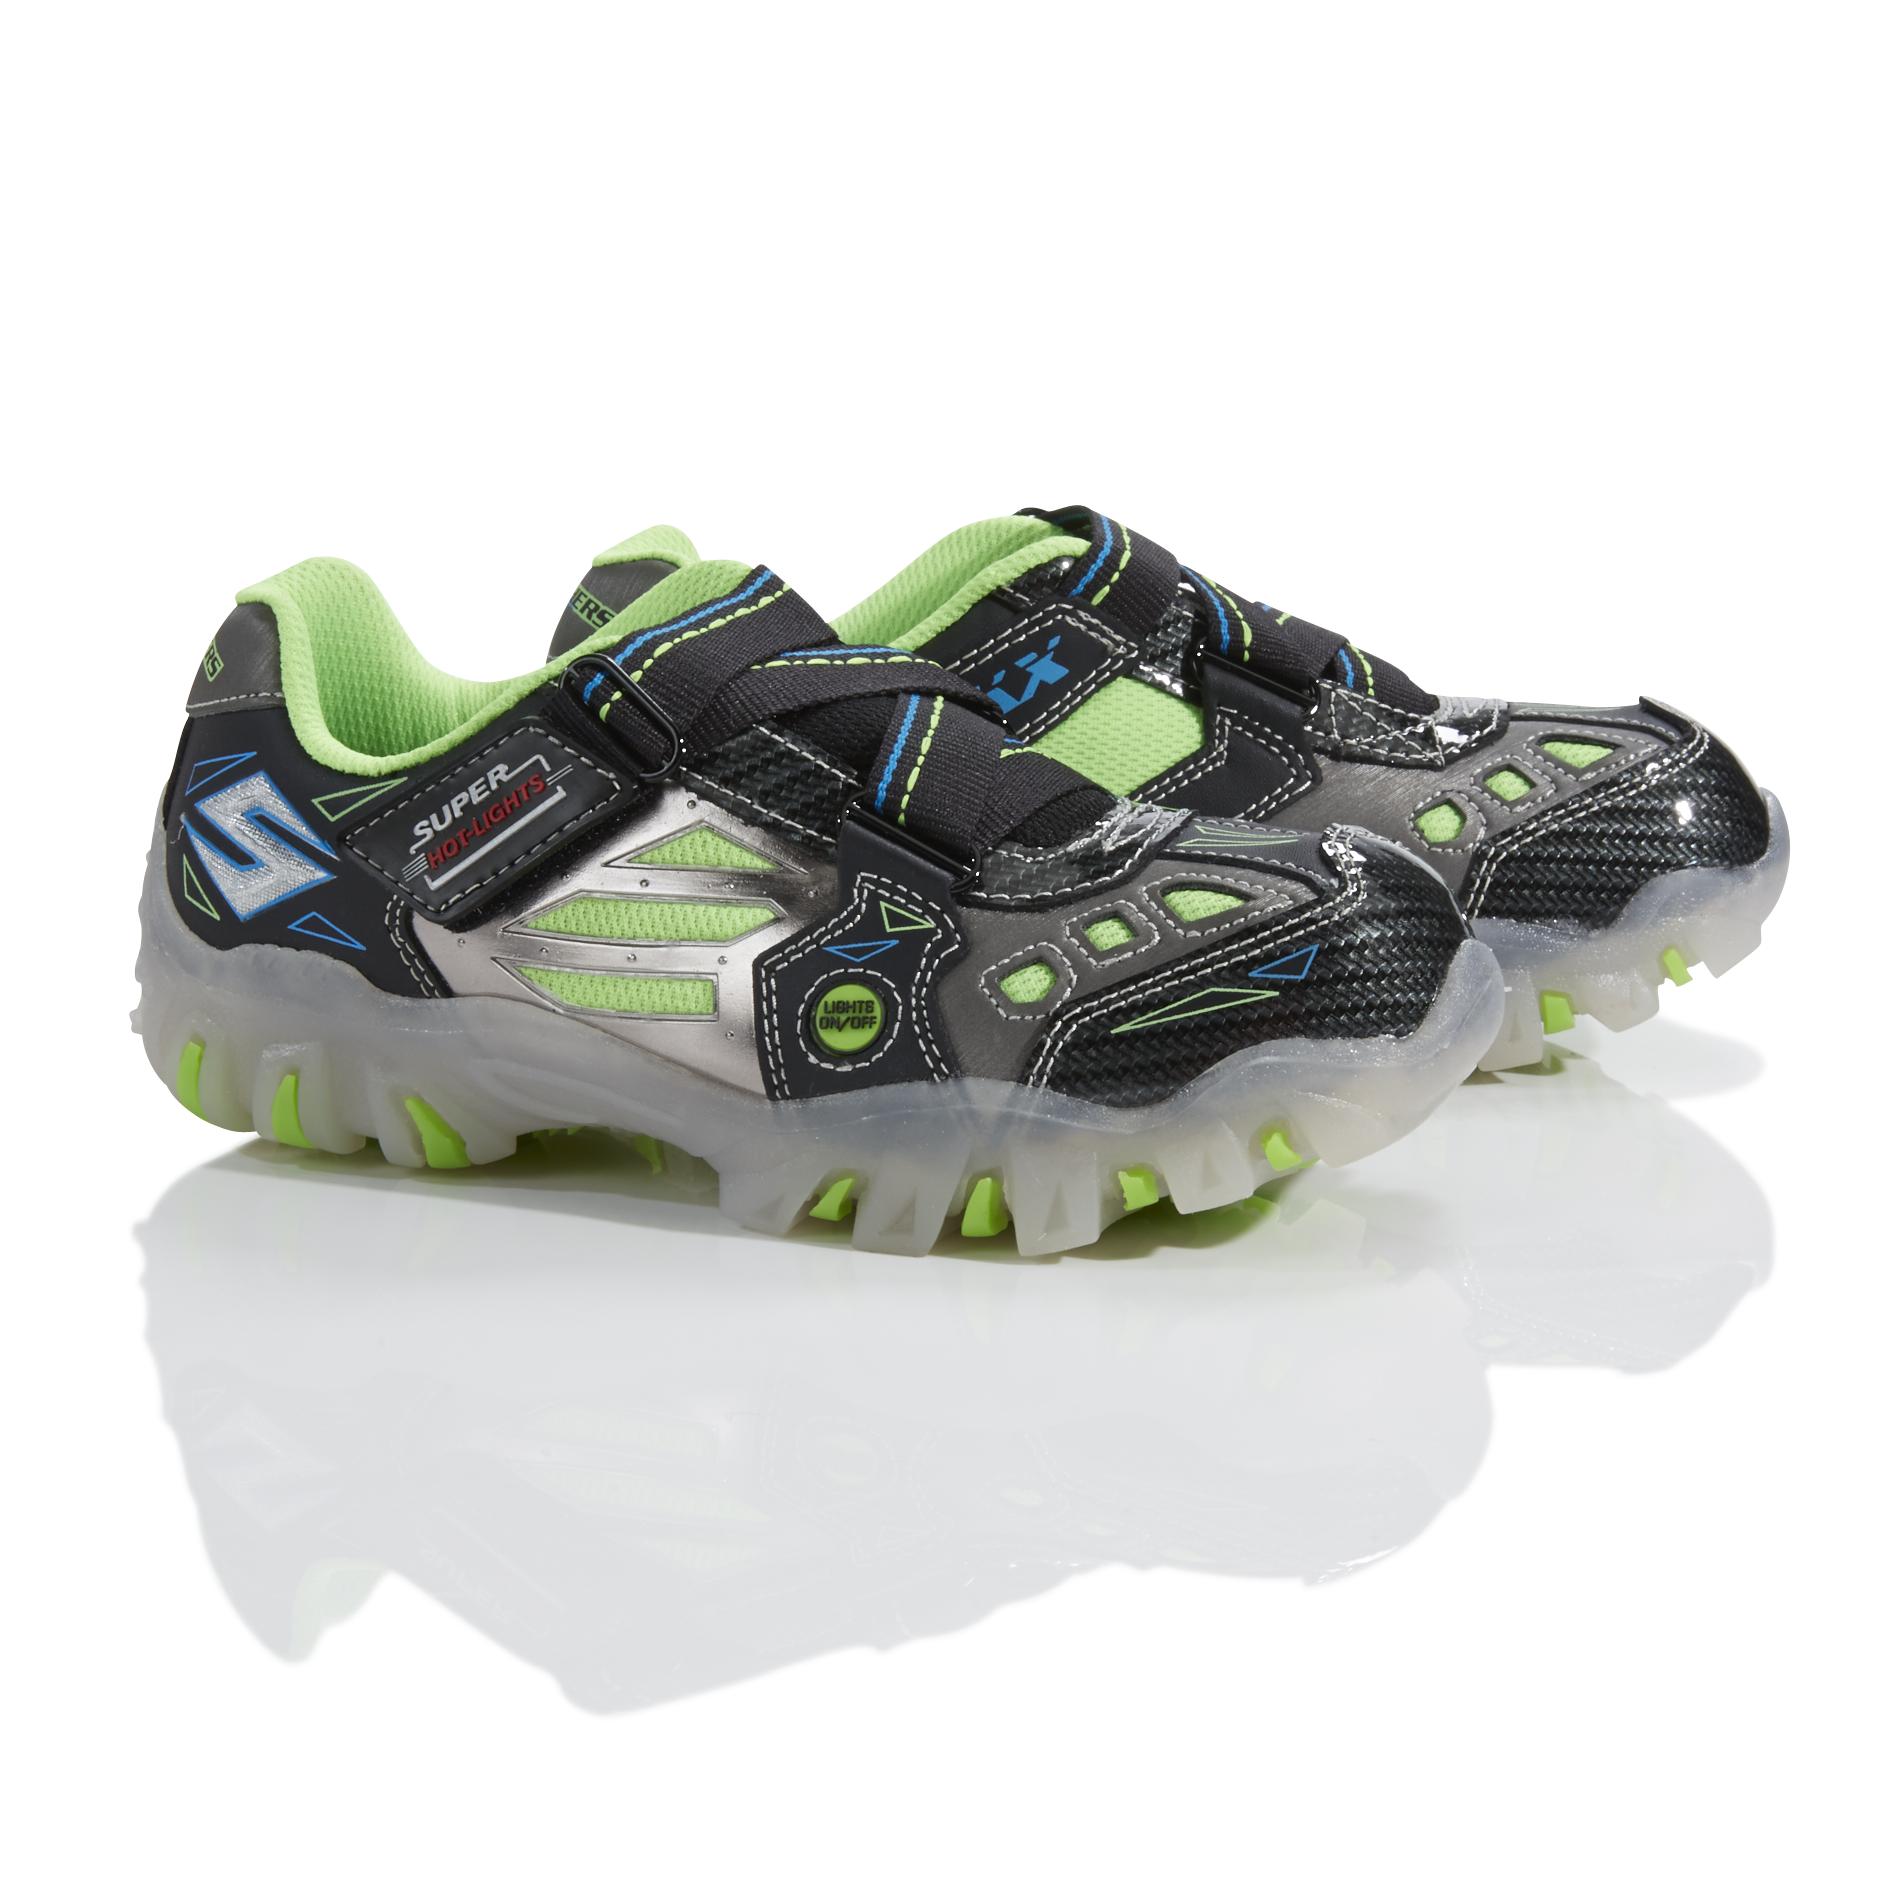 Skechers Boy's Street Lightz Black/Green Athletic Shoe